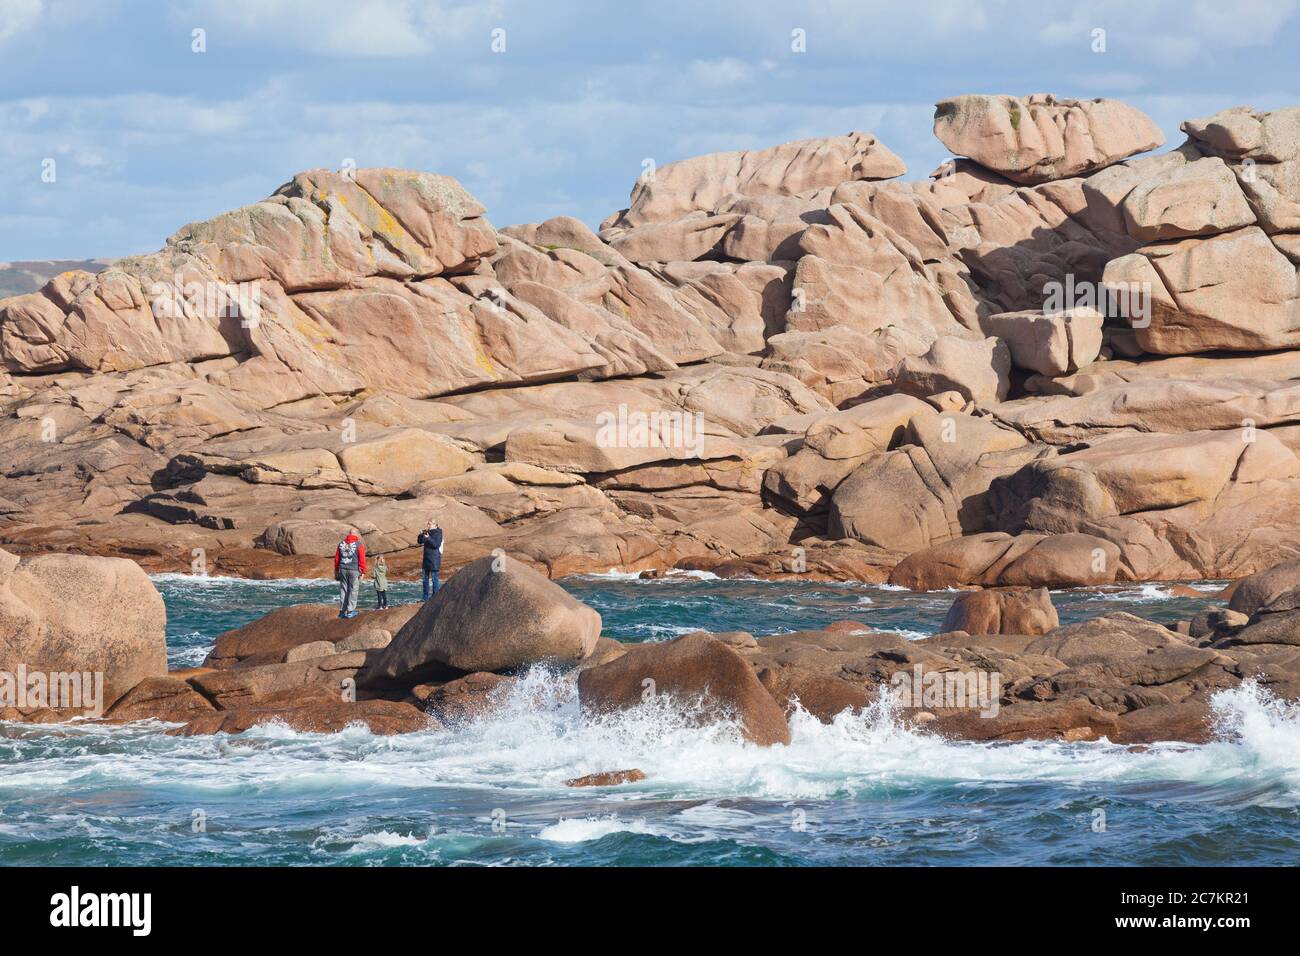 Cote de Granit Rose Rocks with people Stock Photo